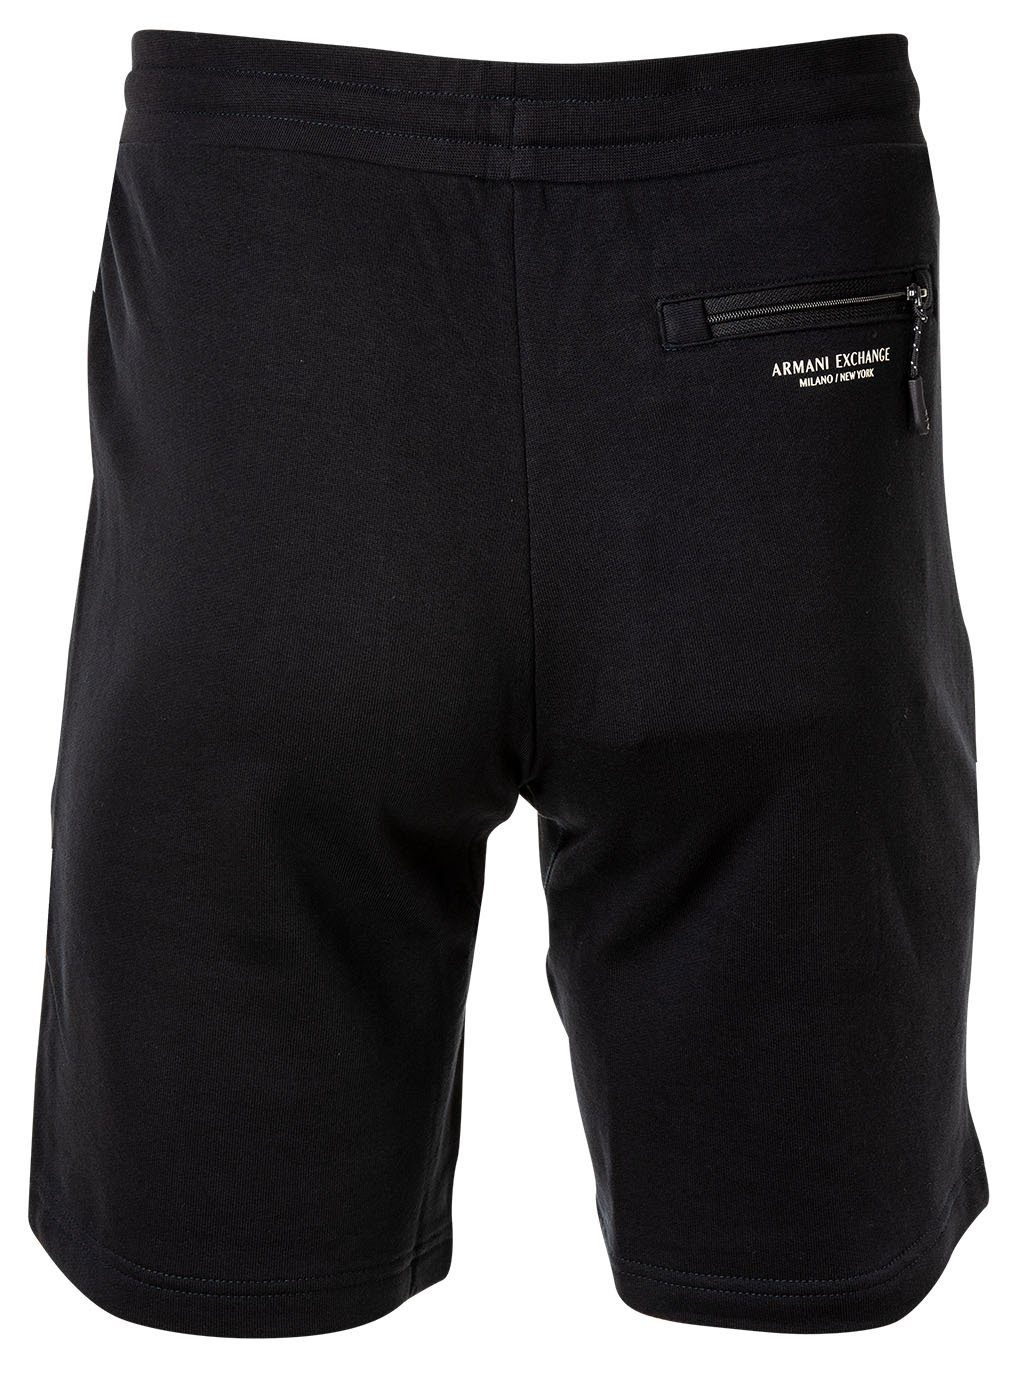 EXCHANGE kurz Pants, Jogginghose Sweatshorts Herren - ARMANI Loungewear Marine